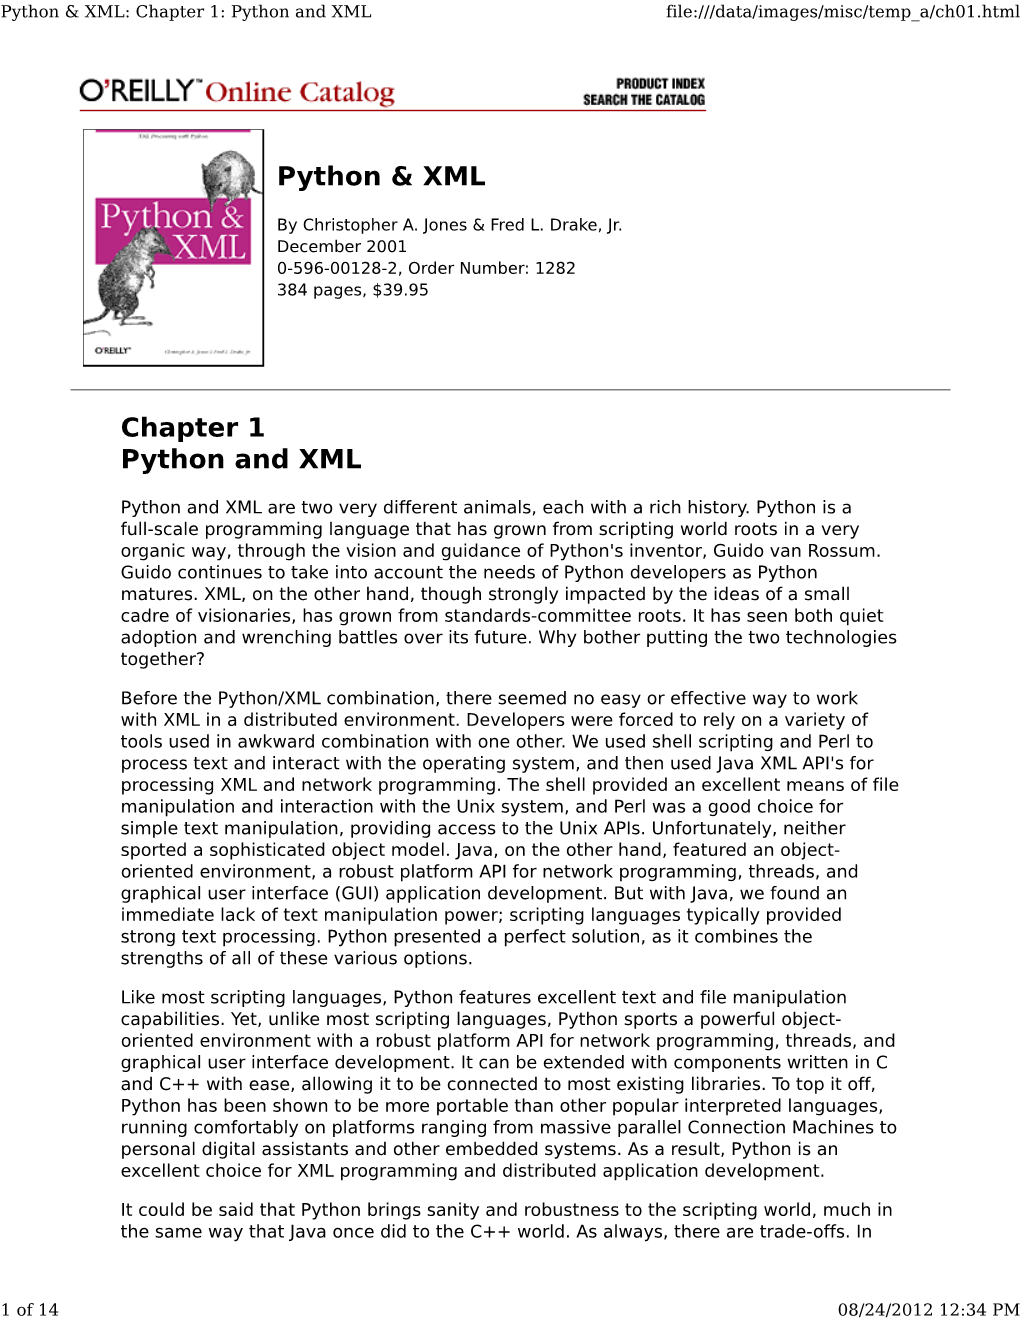 Python & XML Chapter 1 Python And